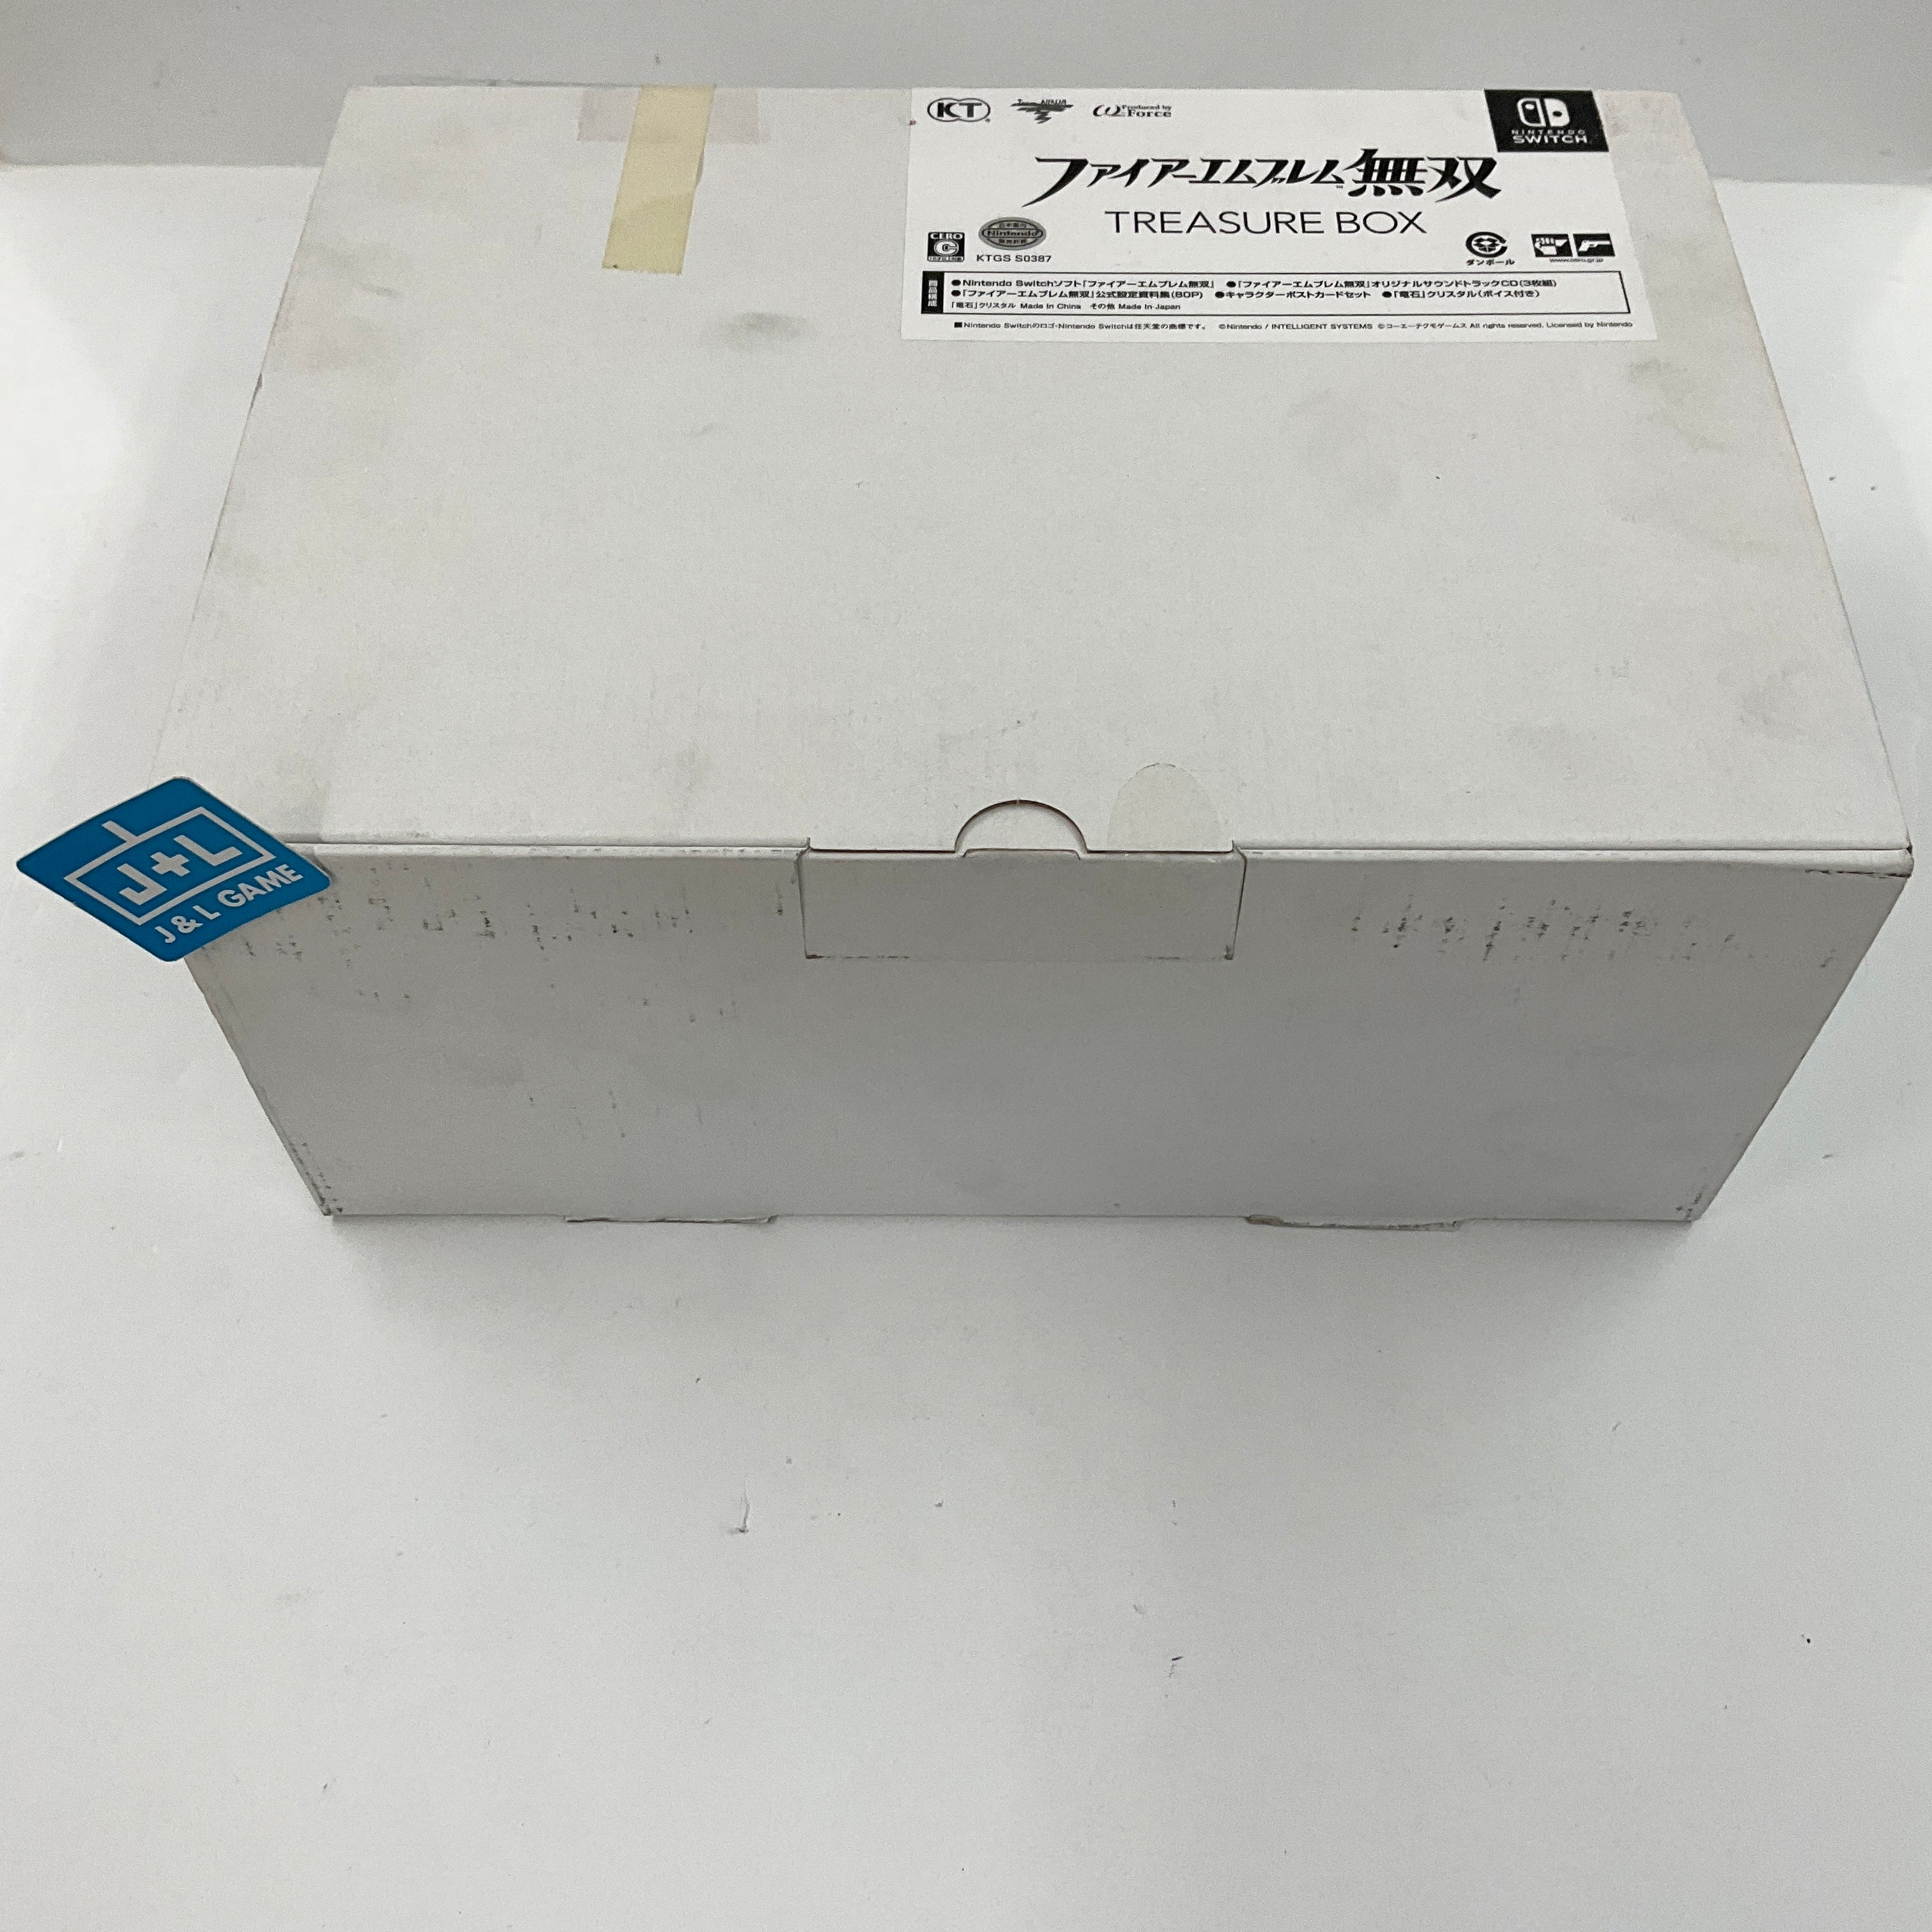 Fire Emblem Musou Treasure Box - (NSW) Nintendo Switch (Japanese Import) Video Games Koei Tecmo Games   